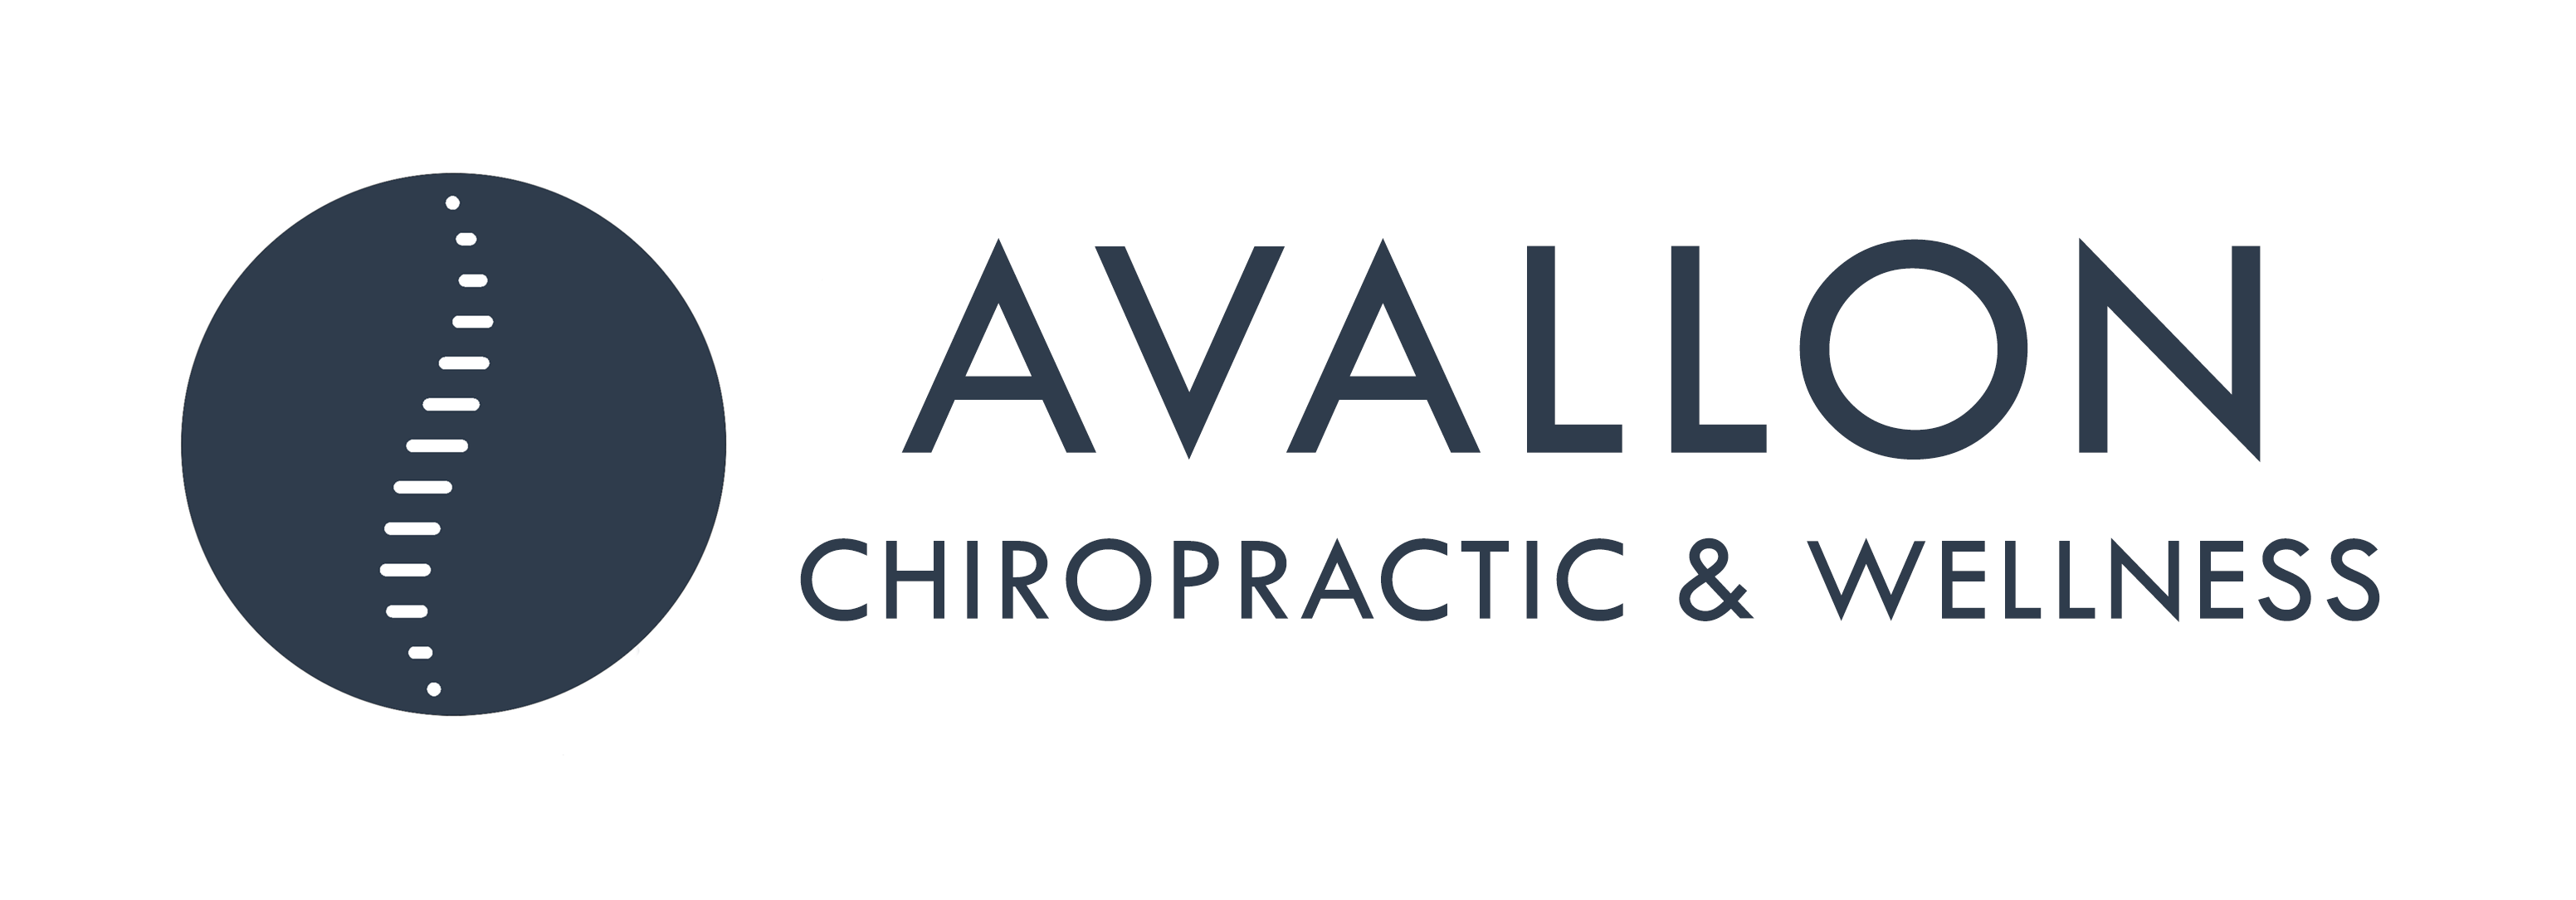 Avallon Chiropractic & Wellness